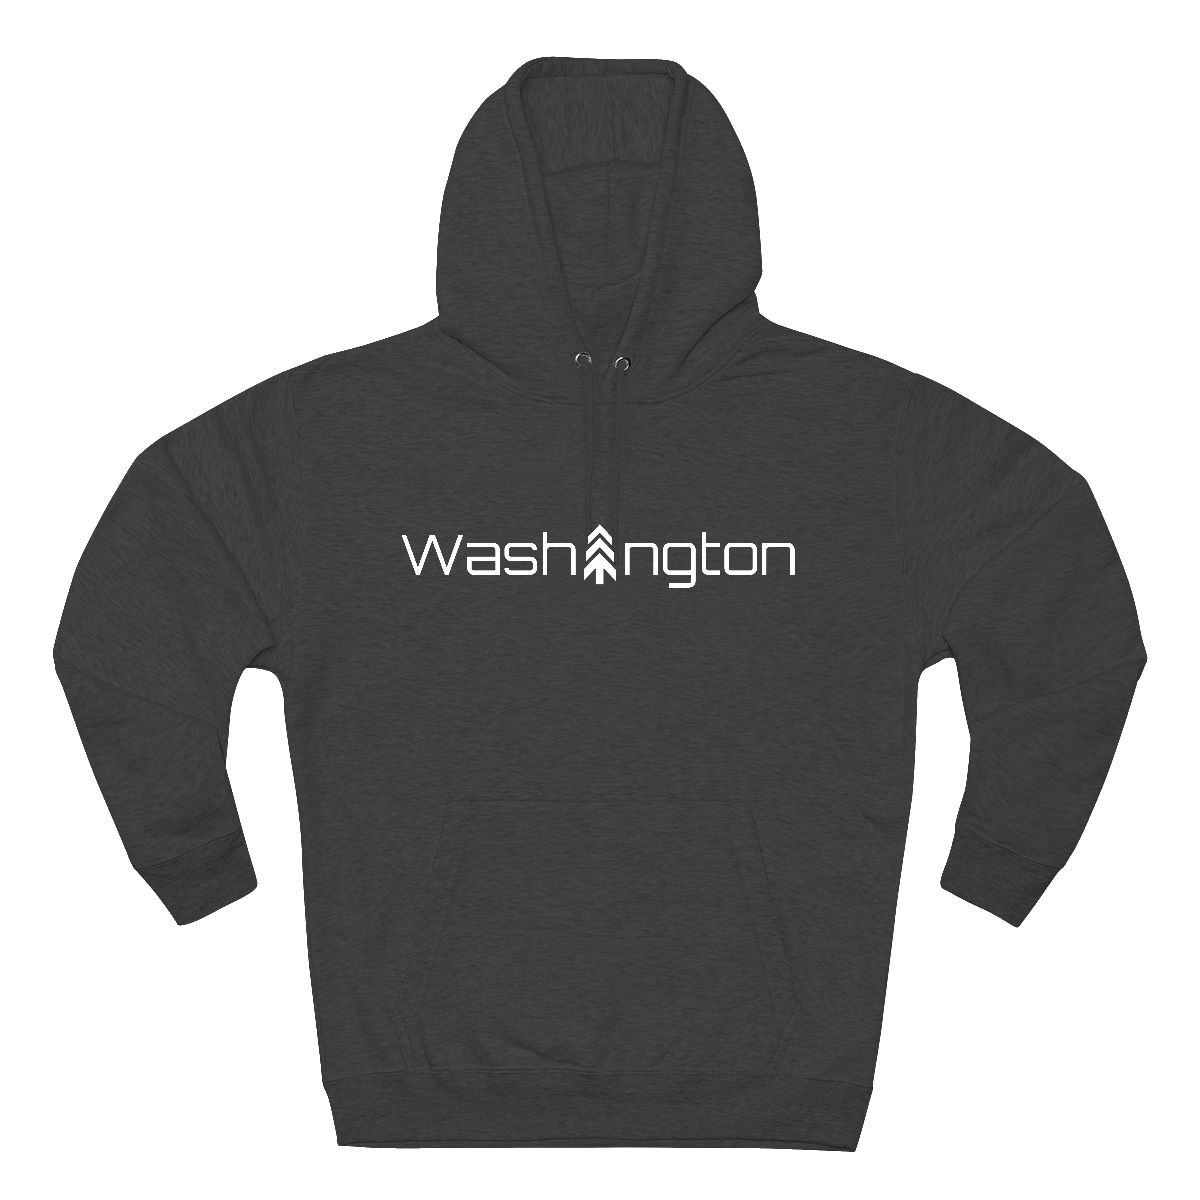 WCC Washington Hoodie